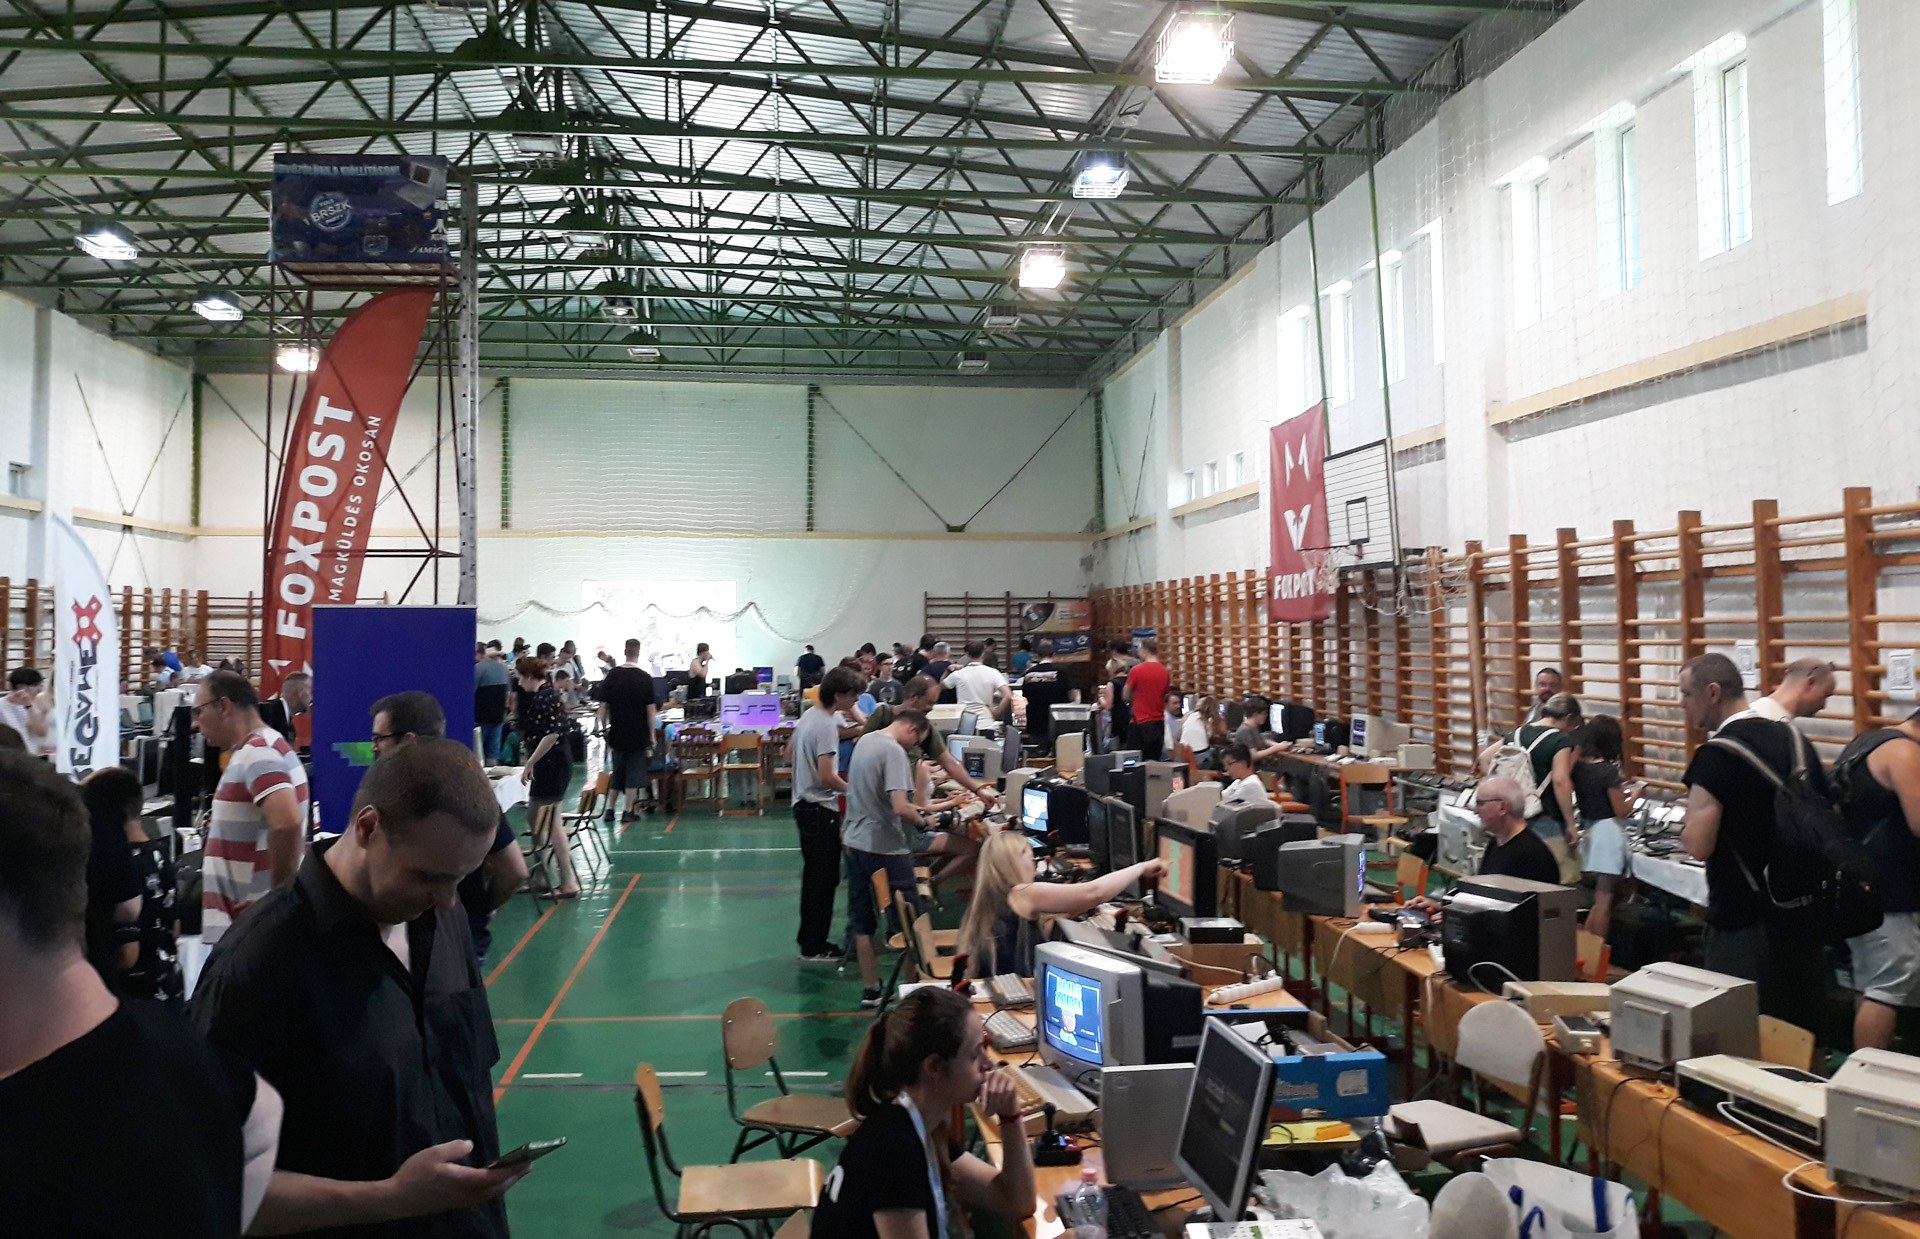 BRSZK, the countrys largest retro PC exhibition